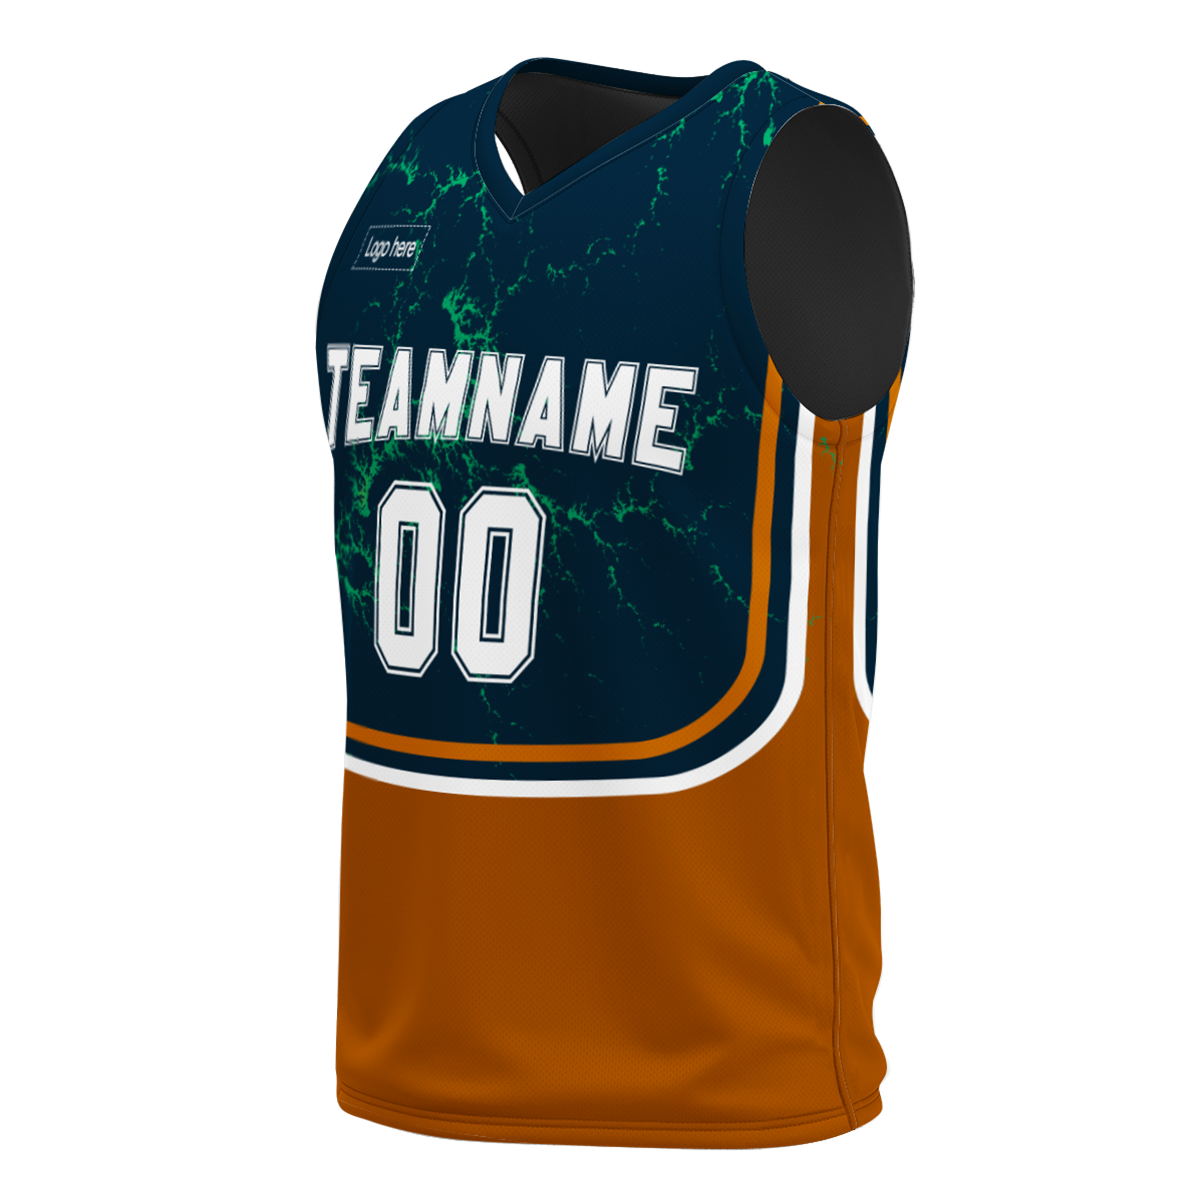 personalized-design-customized-basketball-wear-jersey-uniforms-print-on-demand-training-basketball-suits-at-cj-pod-5